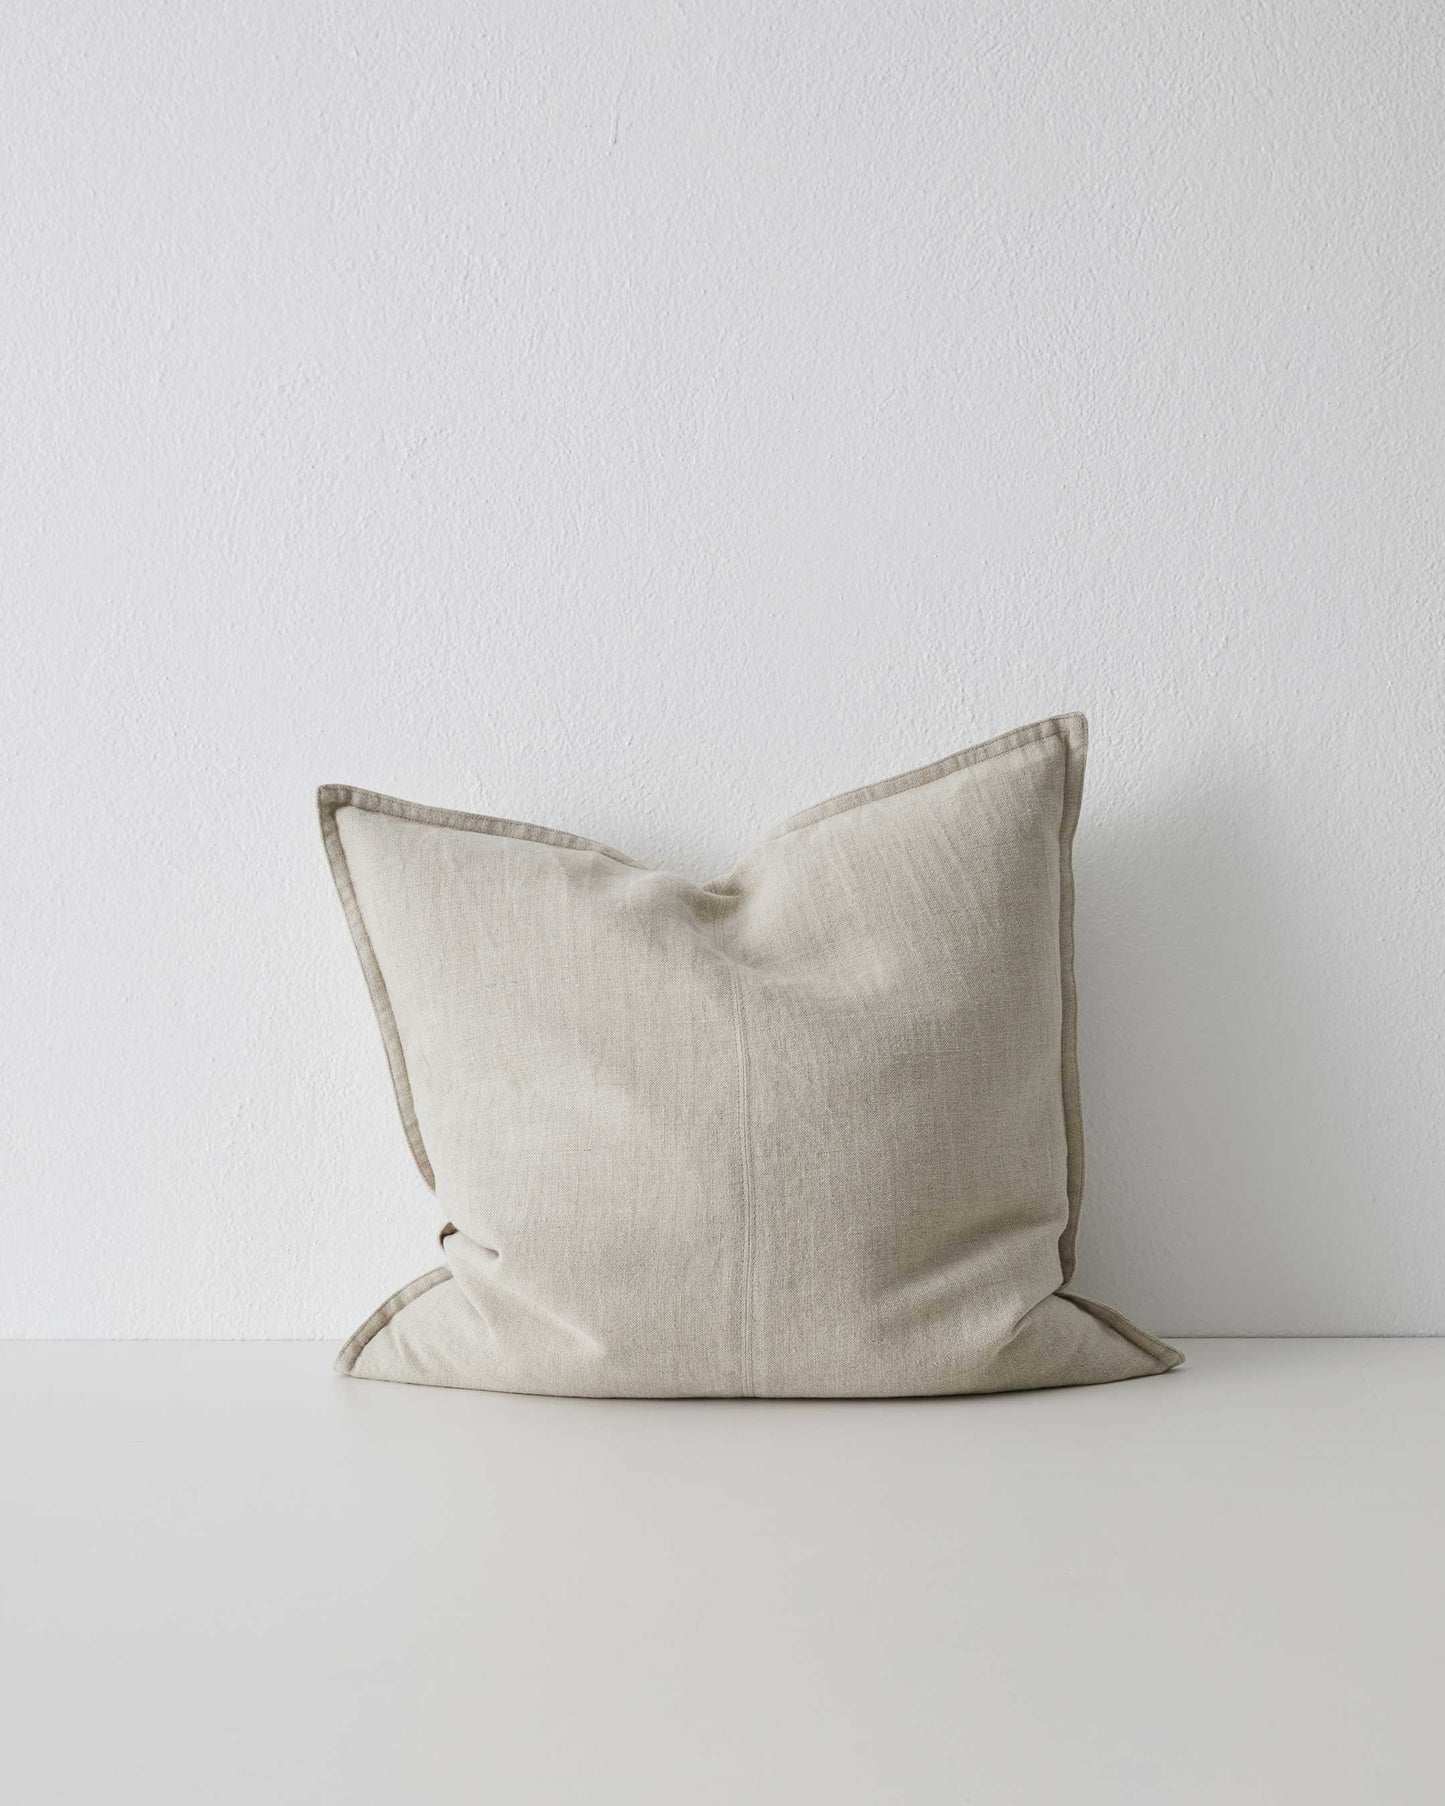 Euro Cushion Cover | Linen